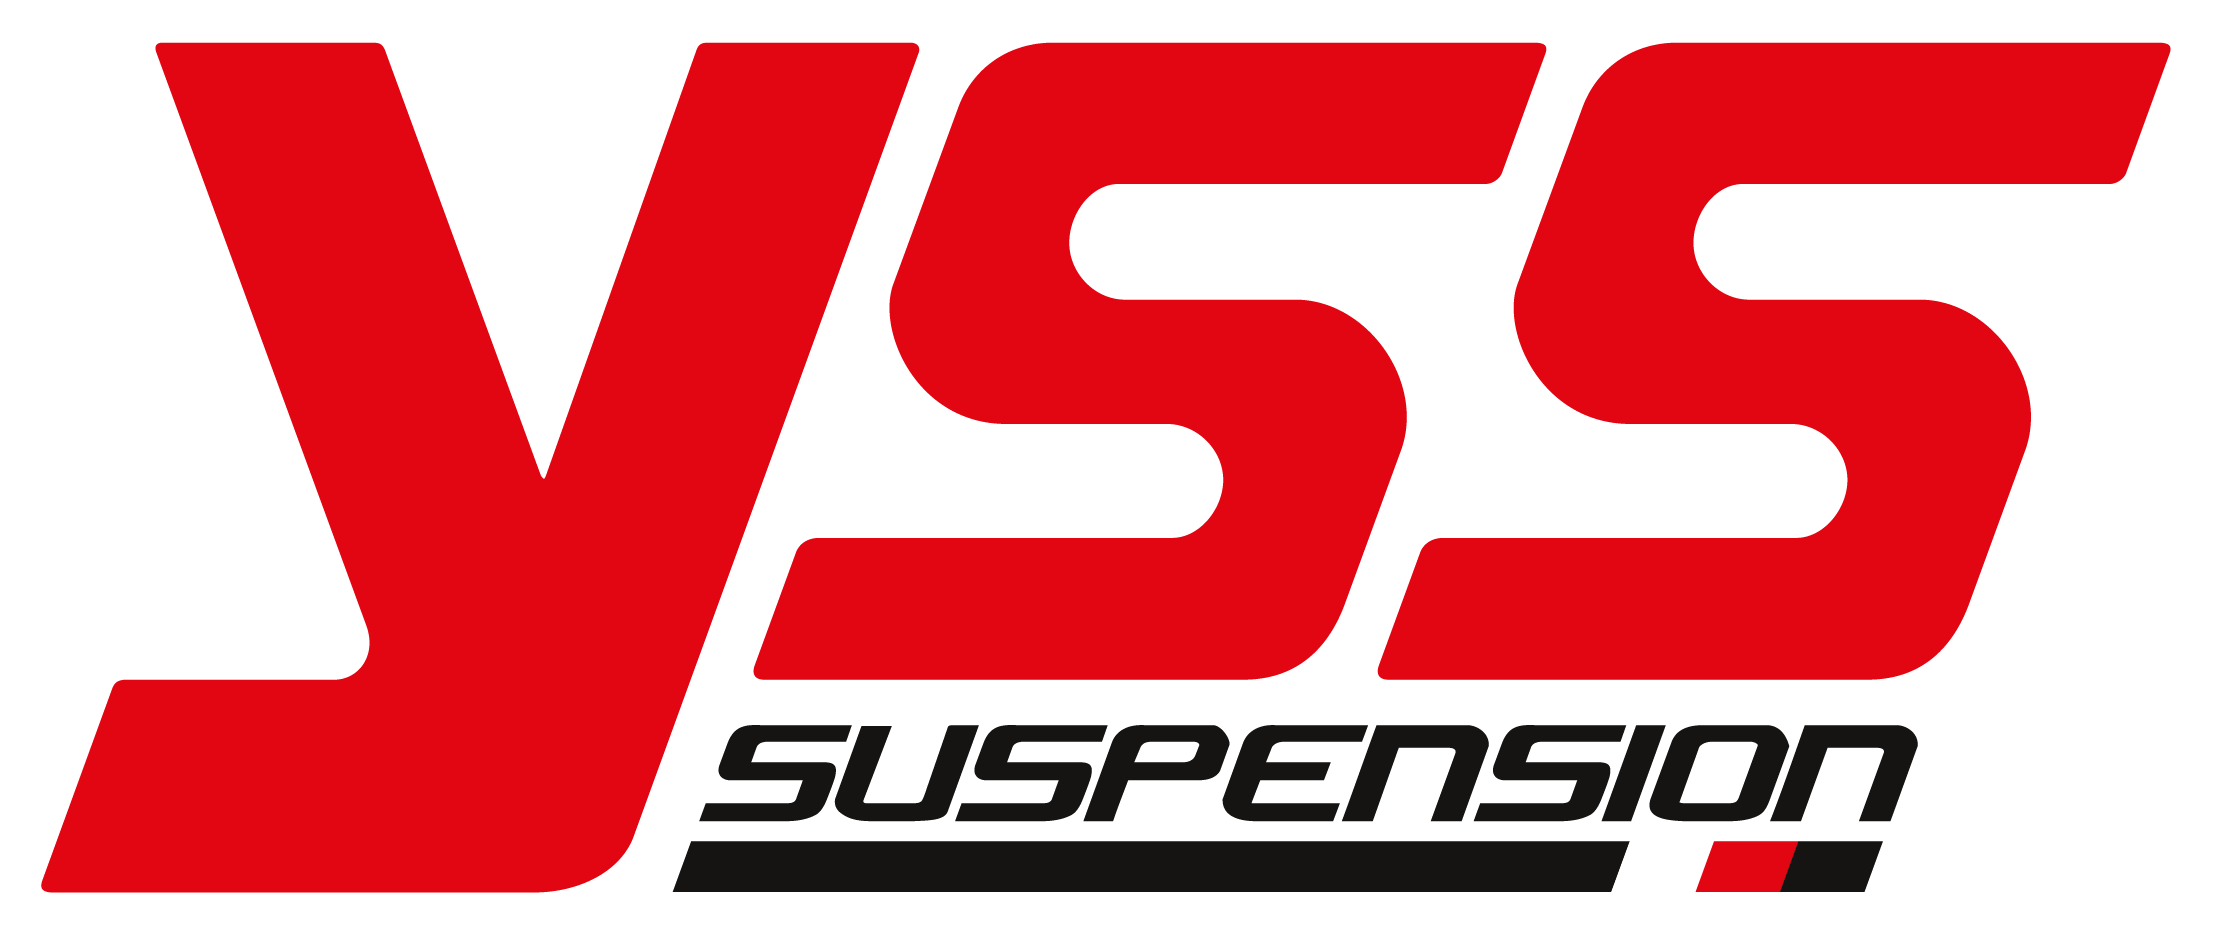 YSS Suspension